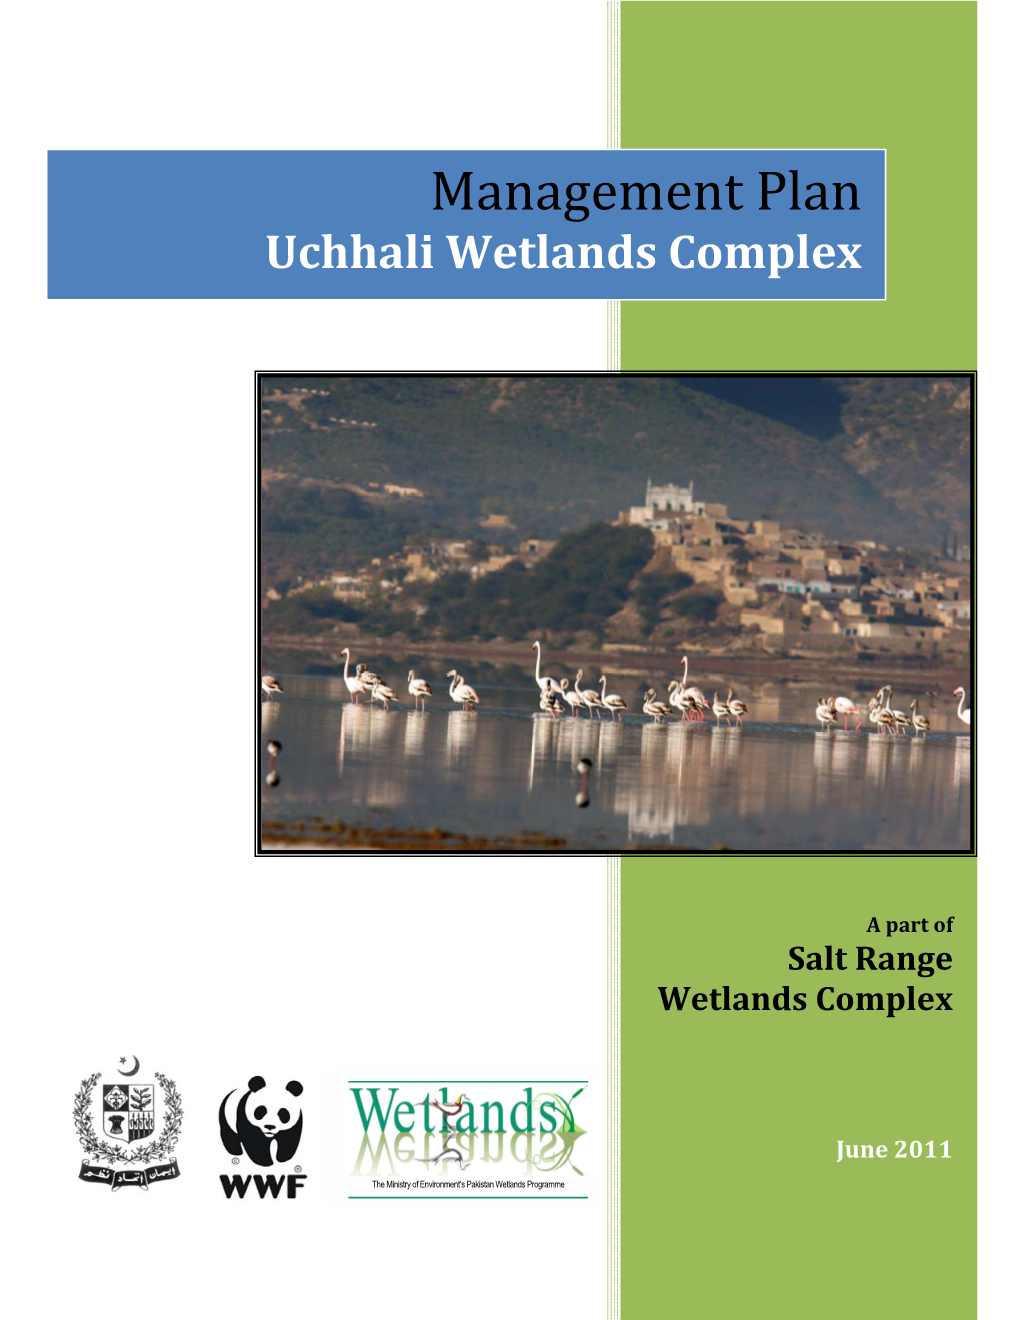 Management Plan for Uchhali Wetlands Complex – a Part of Salt Range Wetlands Complex